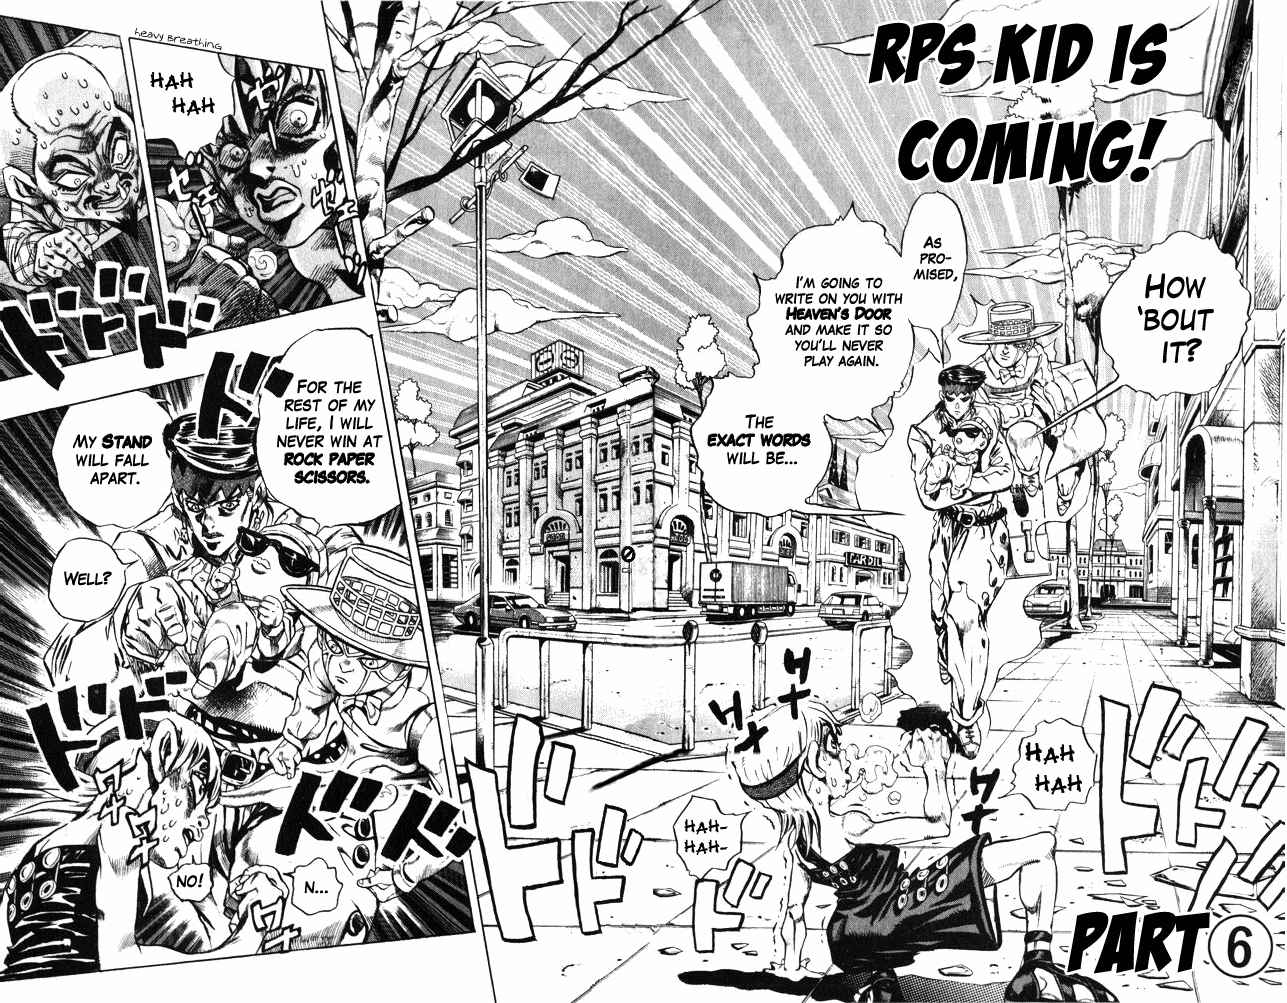 JoJo's Bizarre Adventure Part 4 Diamond is Unbreakable Vol. 12 Ch. 111 RPS Kid is Coming! Part 6